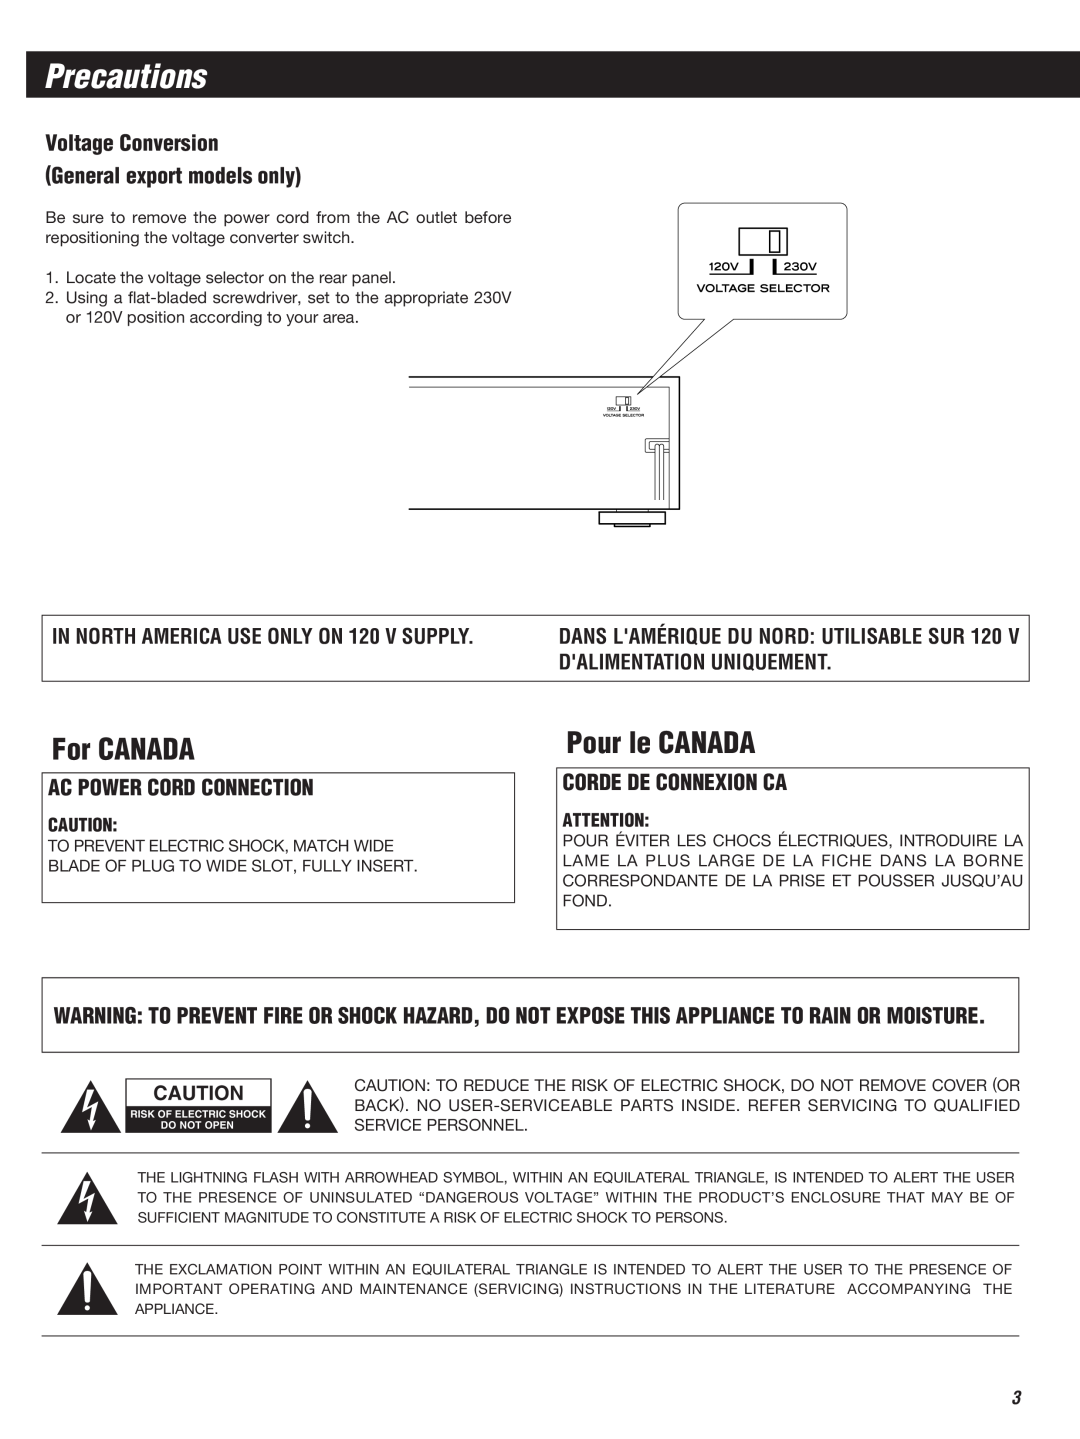 Teac W-860R Precautions, For CANADA, Pour le CANADA, Voltage Conversion General export models only, Corde De Connexion Ca 